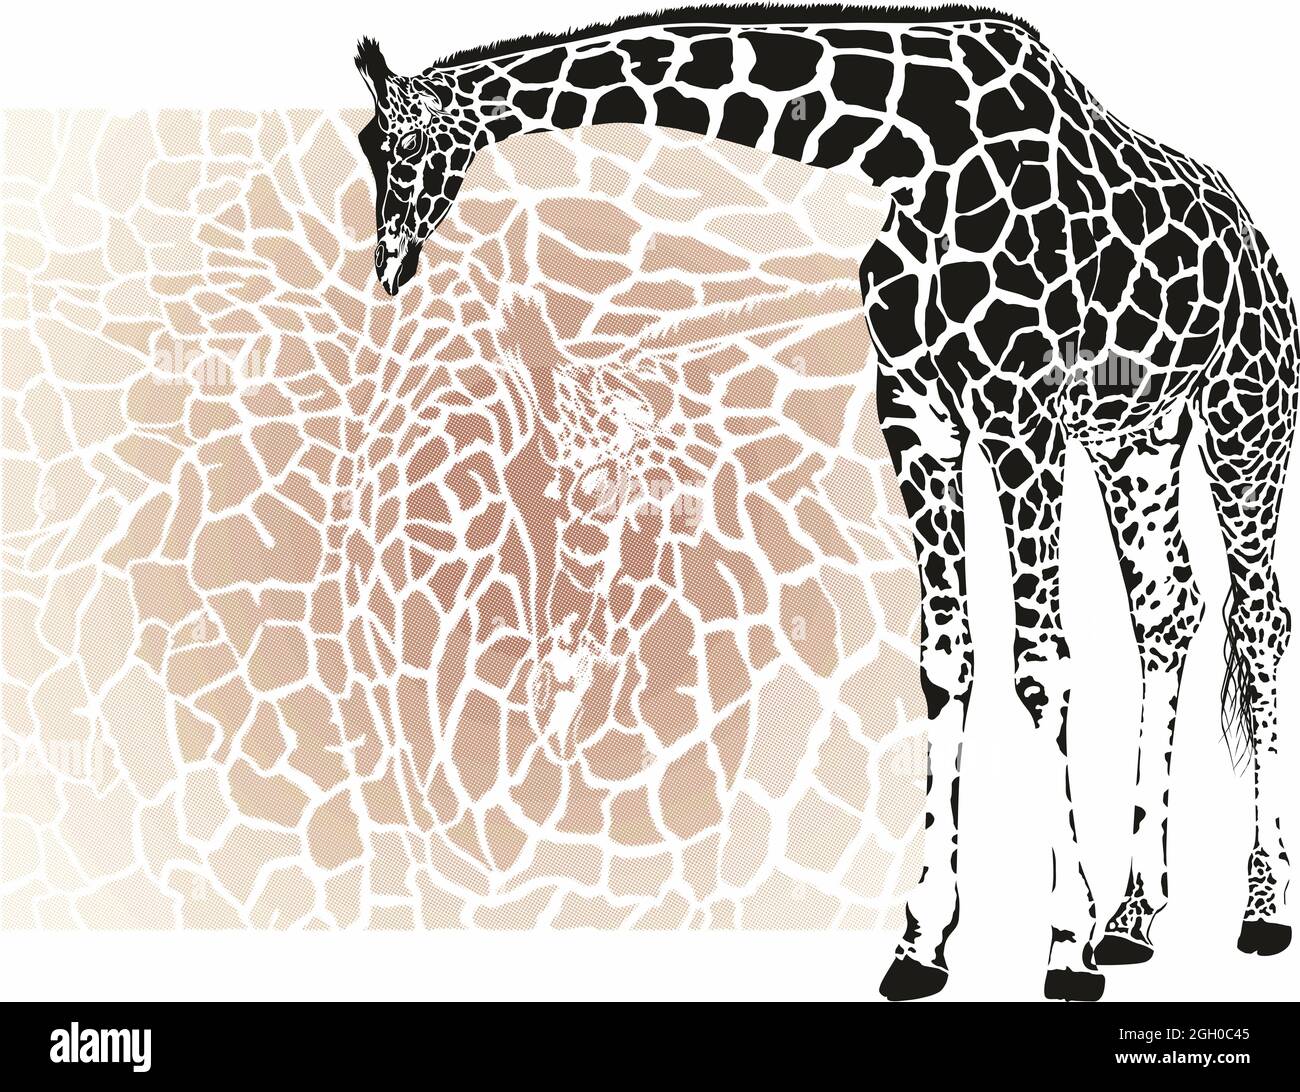 Rasterhintergrund mit Giraffenmotiv Stockfoto